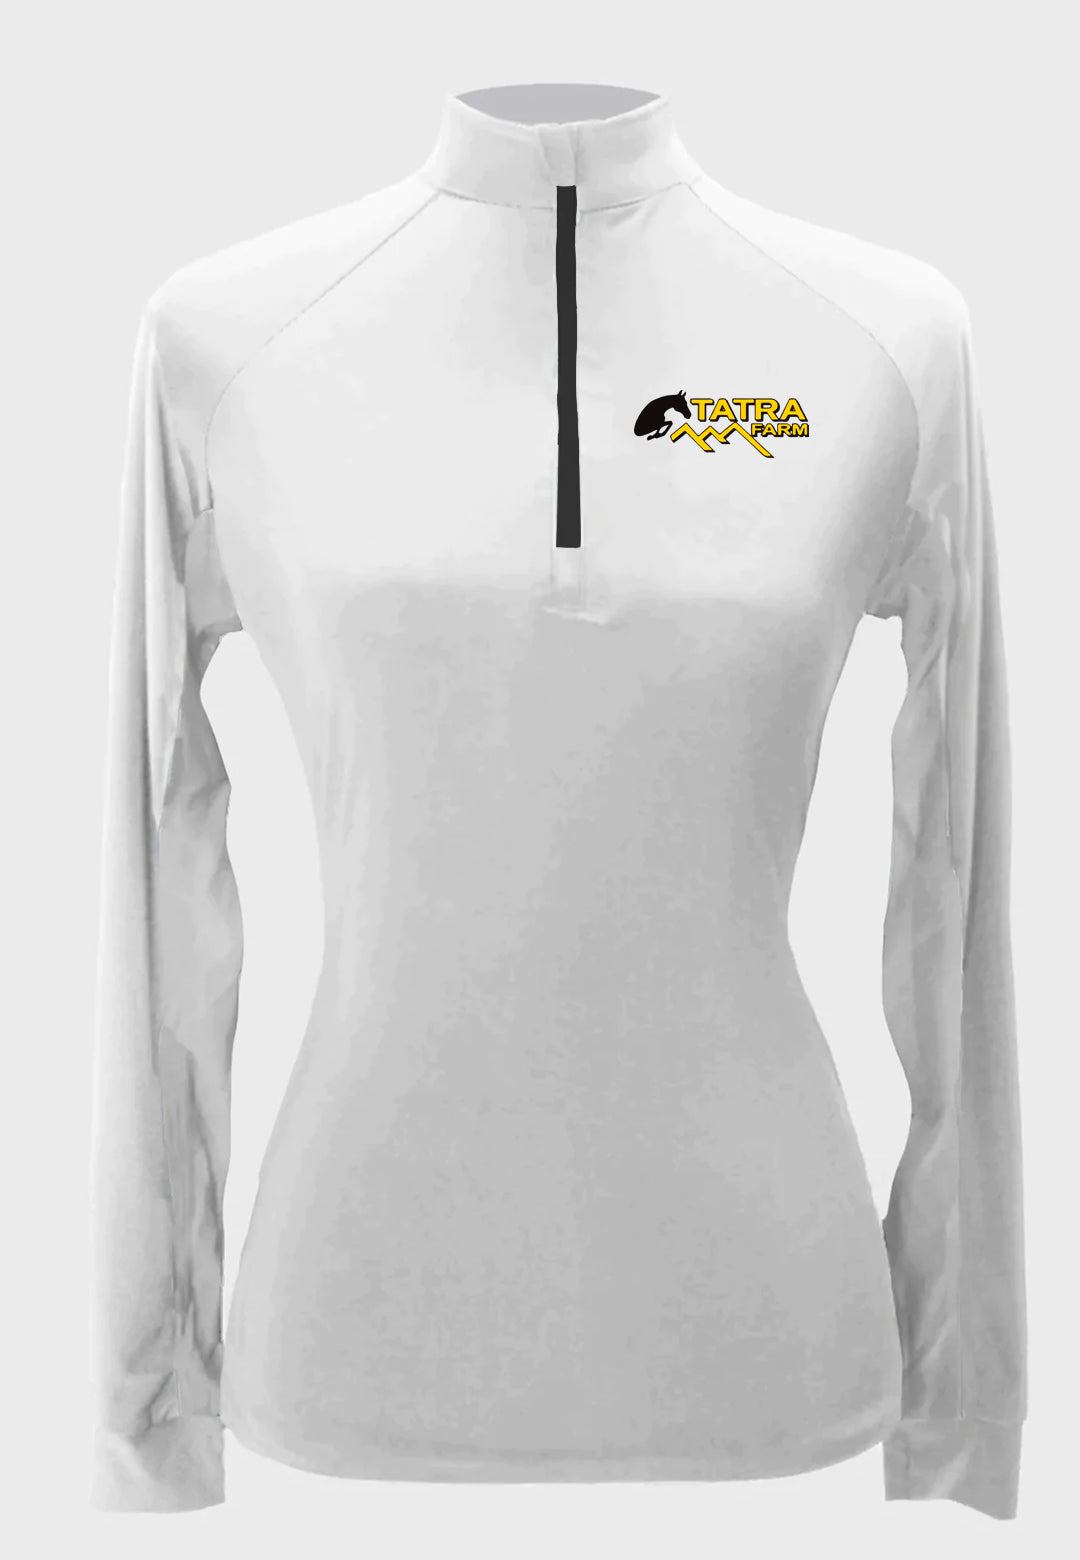 Tatra Farm Custom Long-Sleeve White Sun Shirt, Adult + Youth Sizes